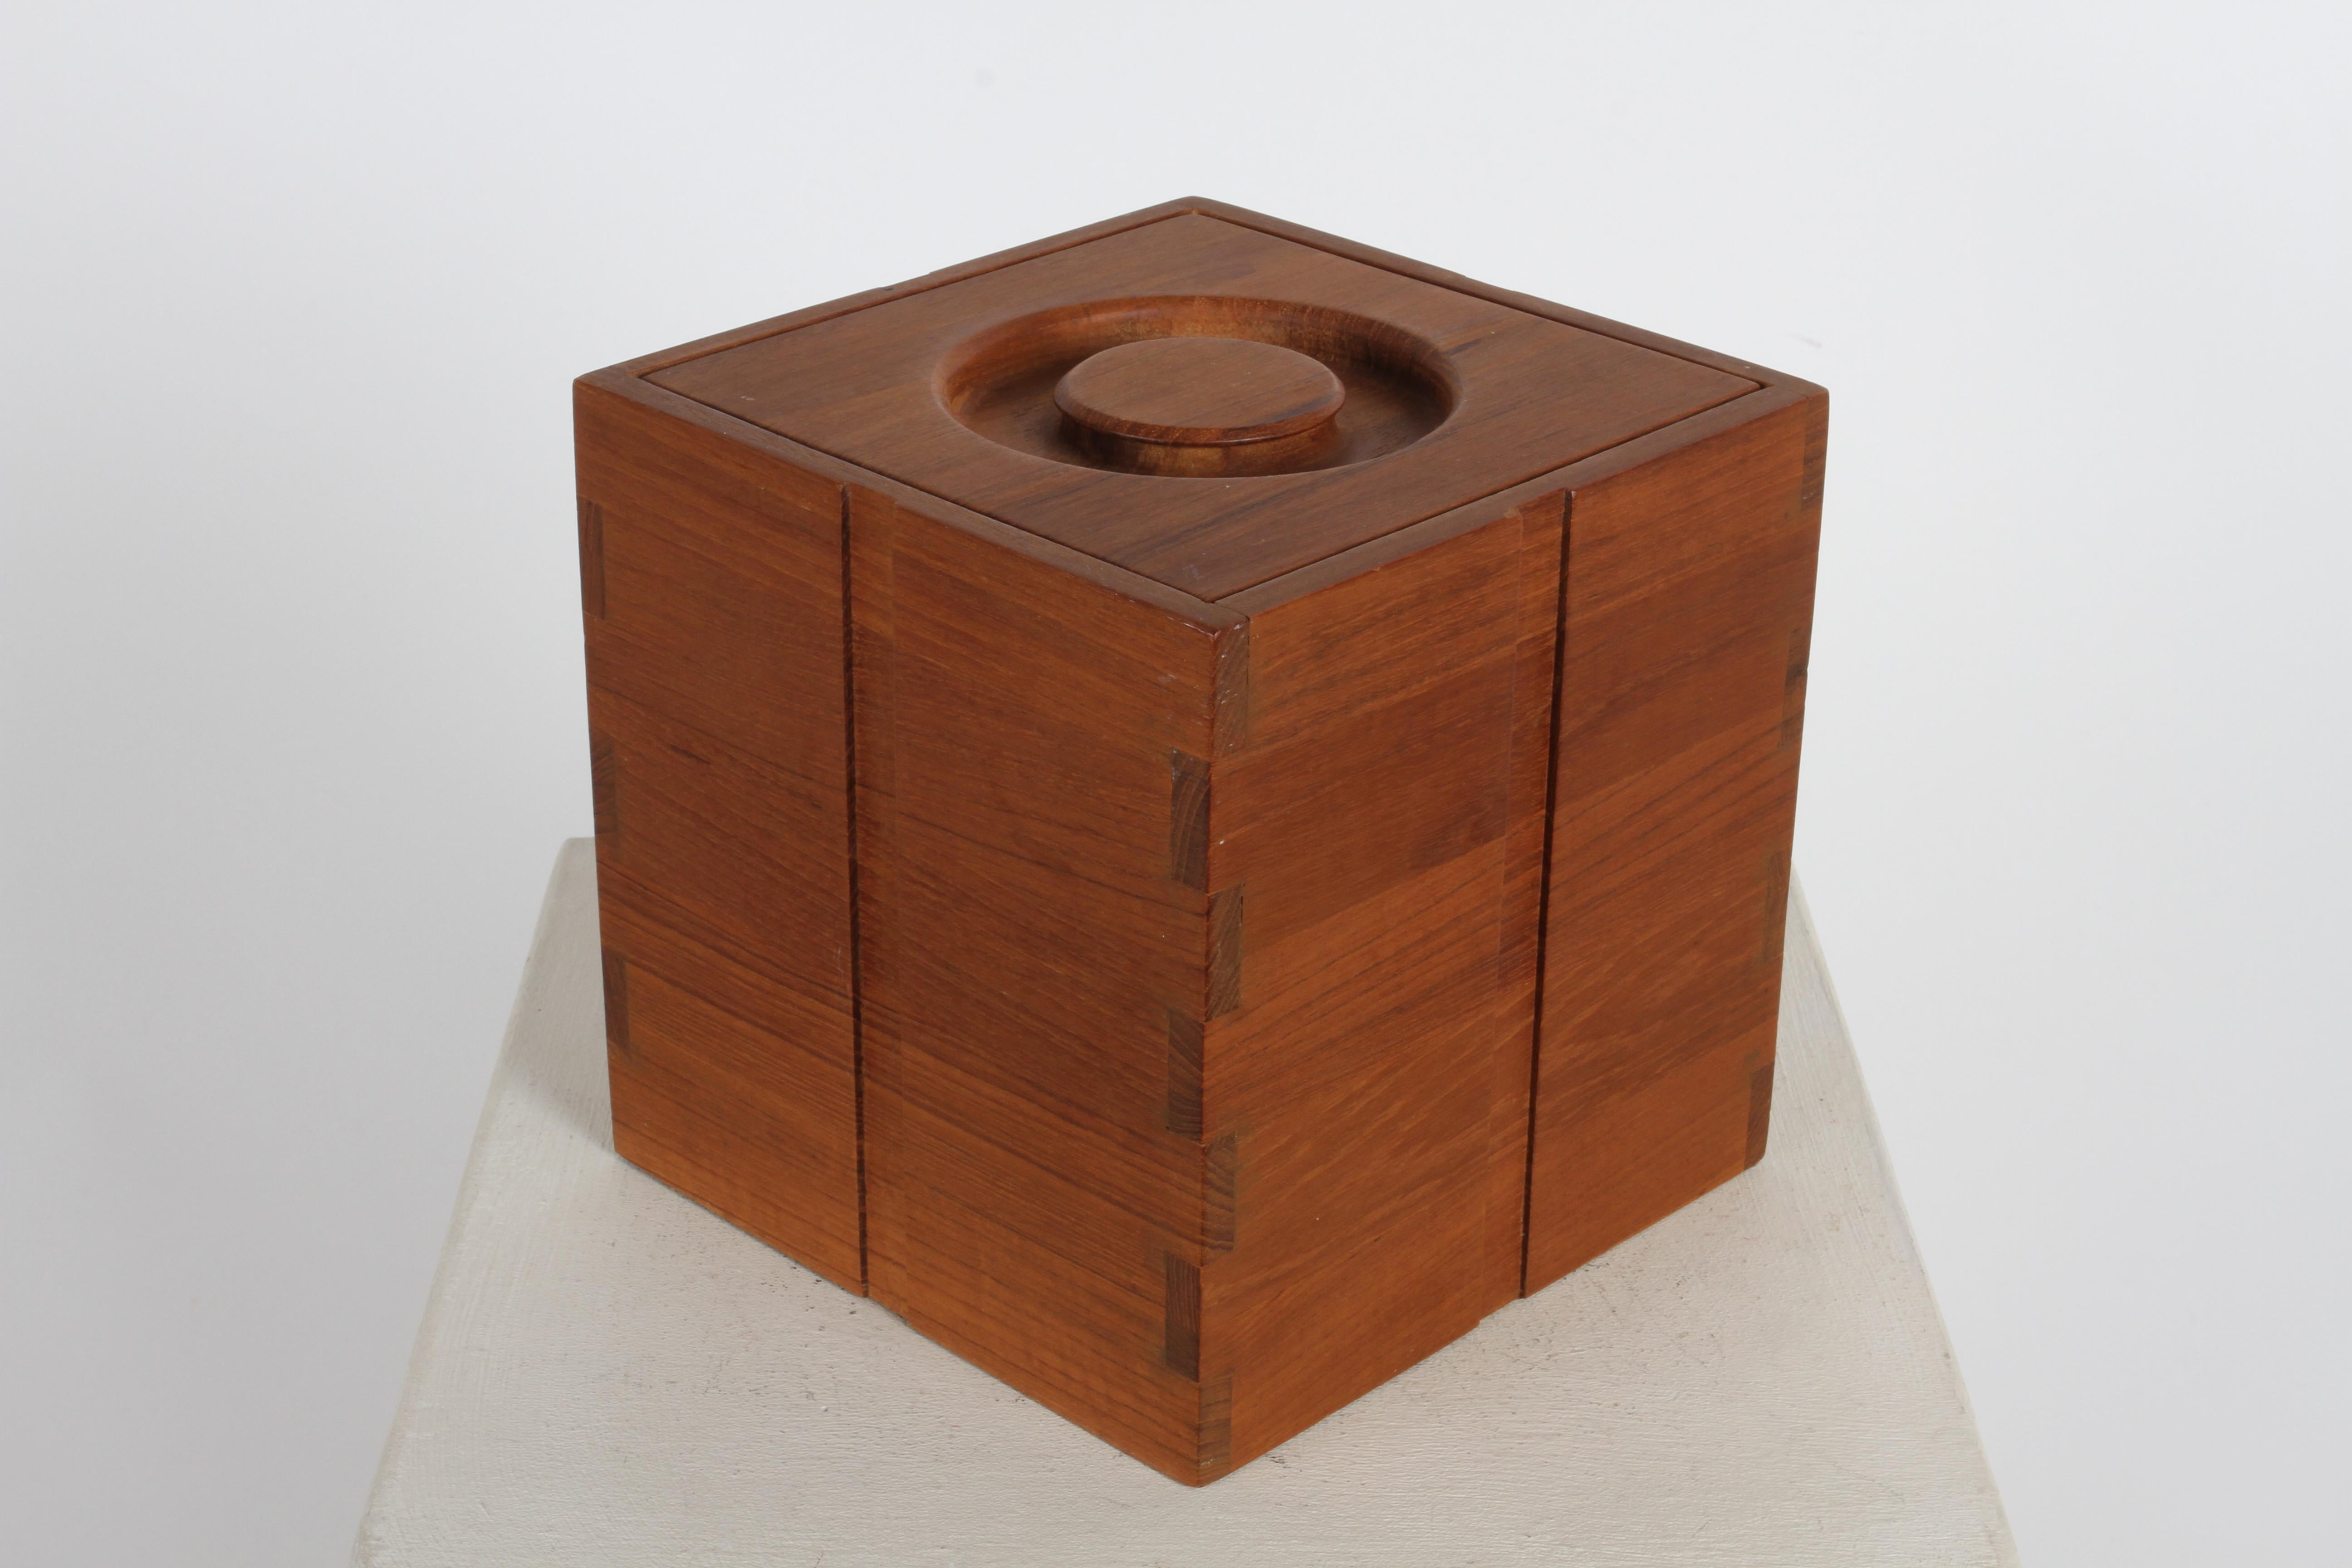 1970s Kalmar Designs Teak Wood Ice Bucket with Thongs - Danish Modern Style - For Sale 1